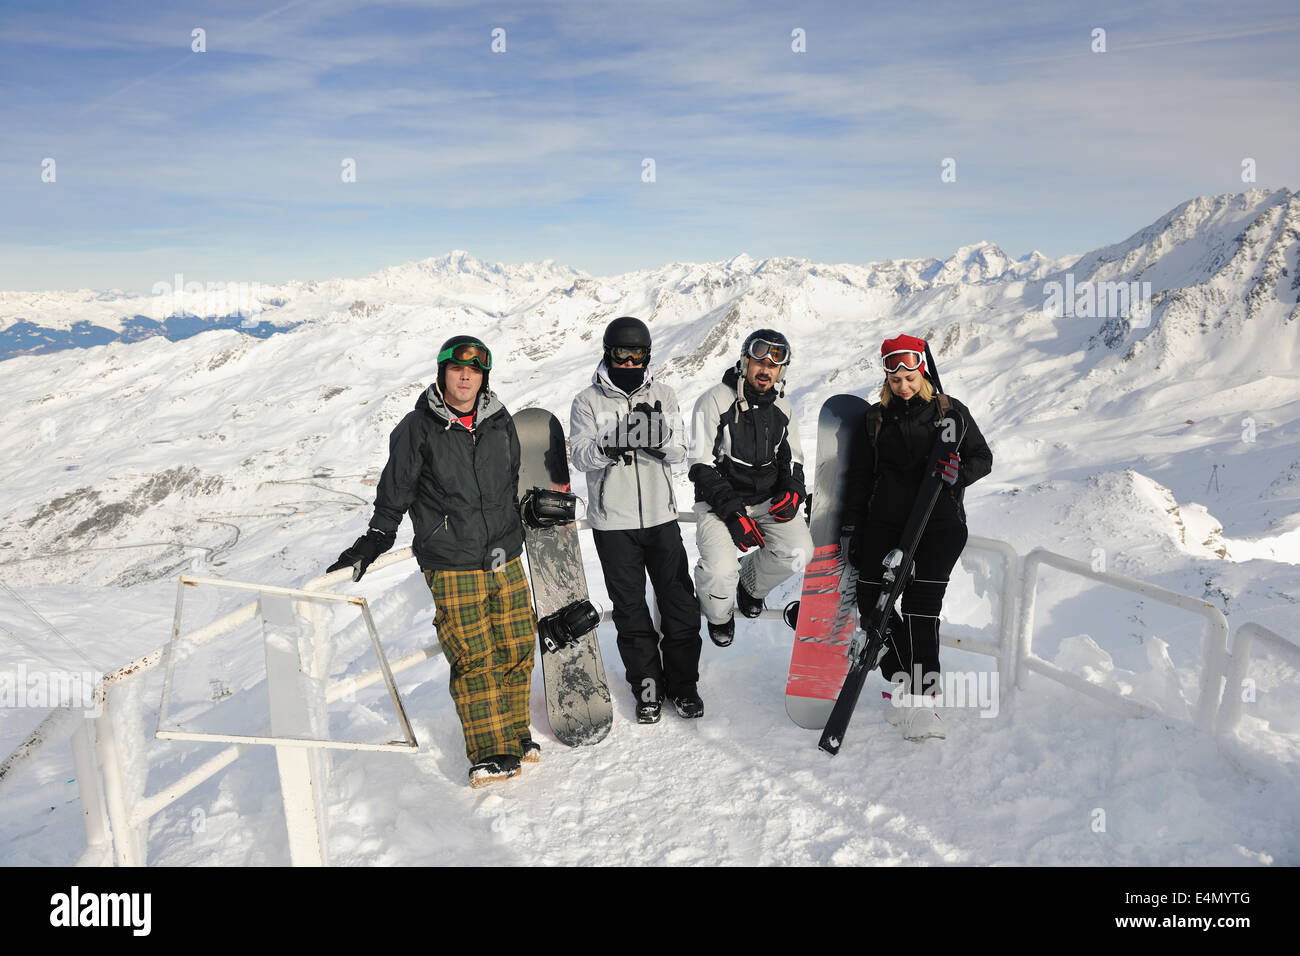 people group on snow at winter season Stock Photo